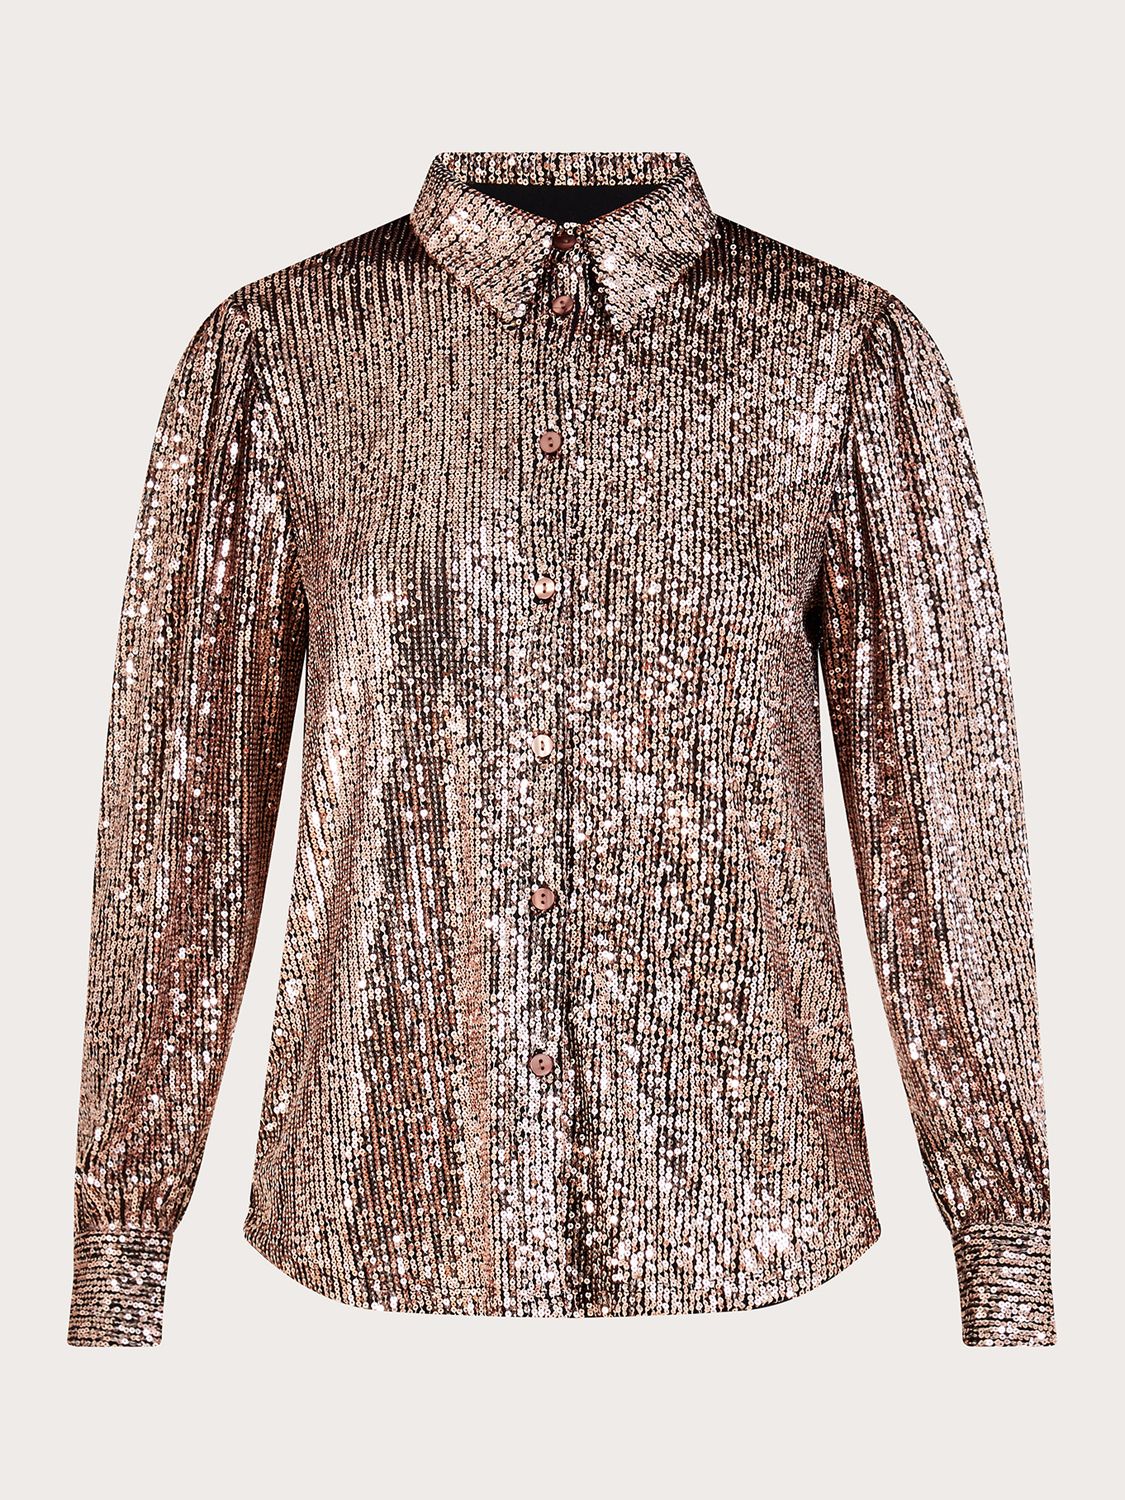 Monsoon Megan Sequin Button Through Shirt, Gold at John Lewis & Partners